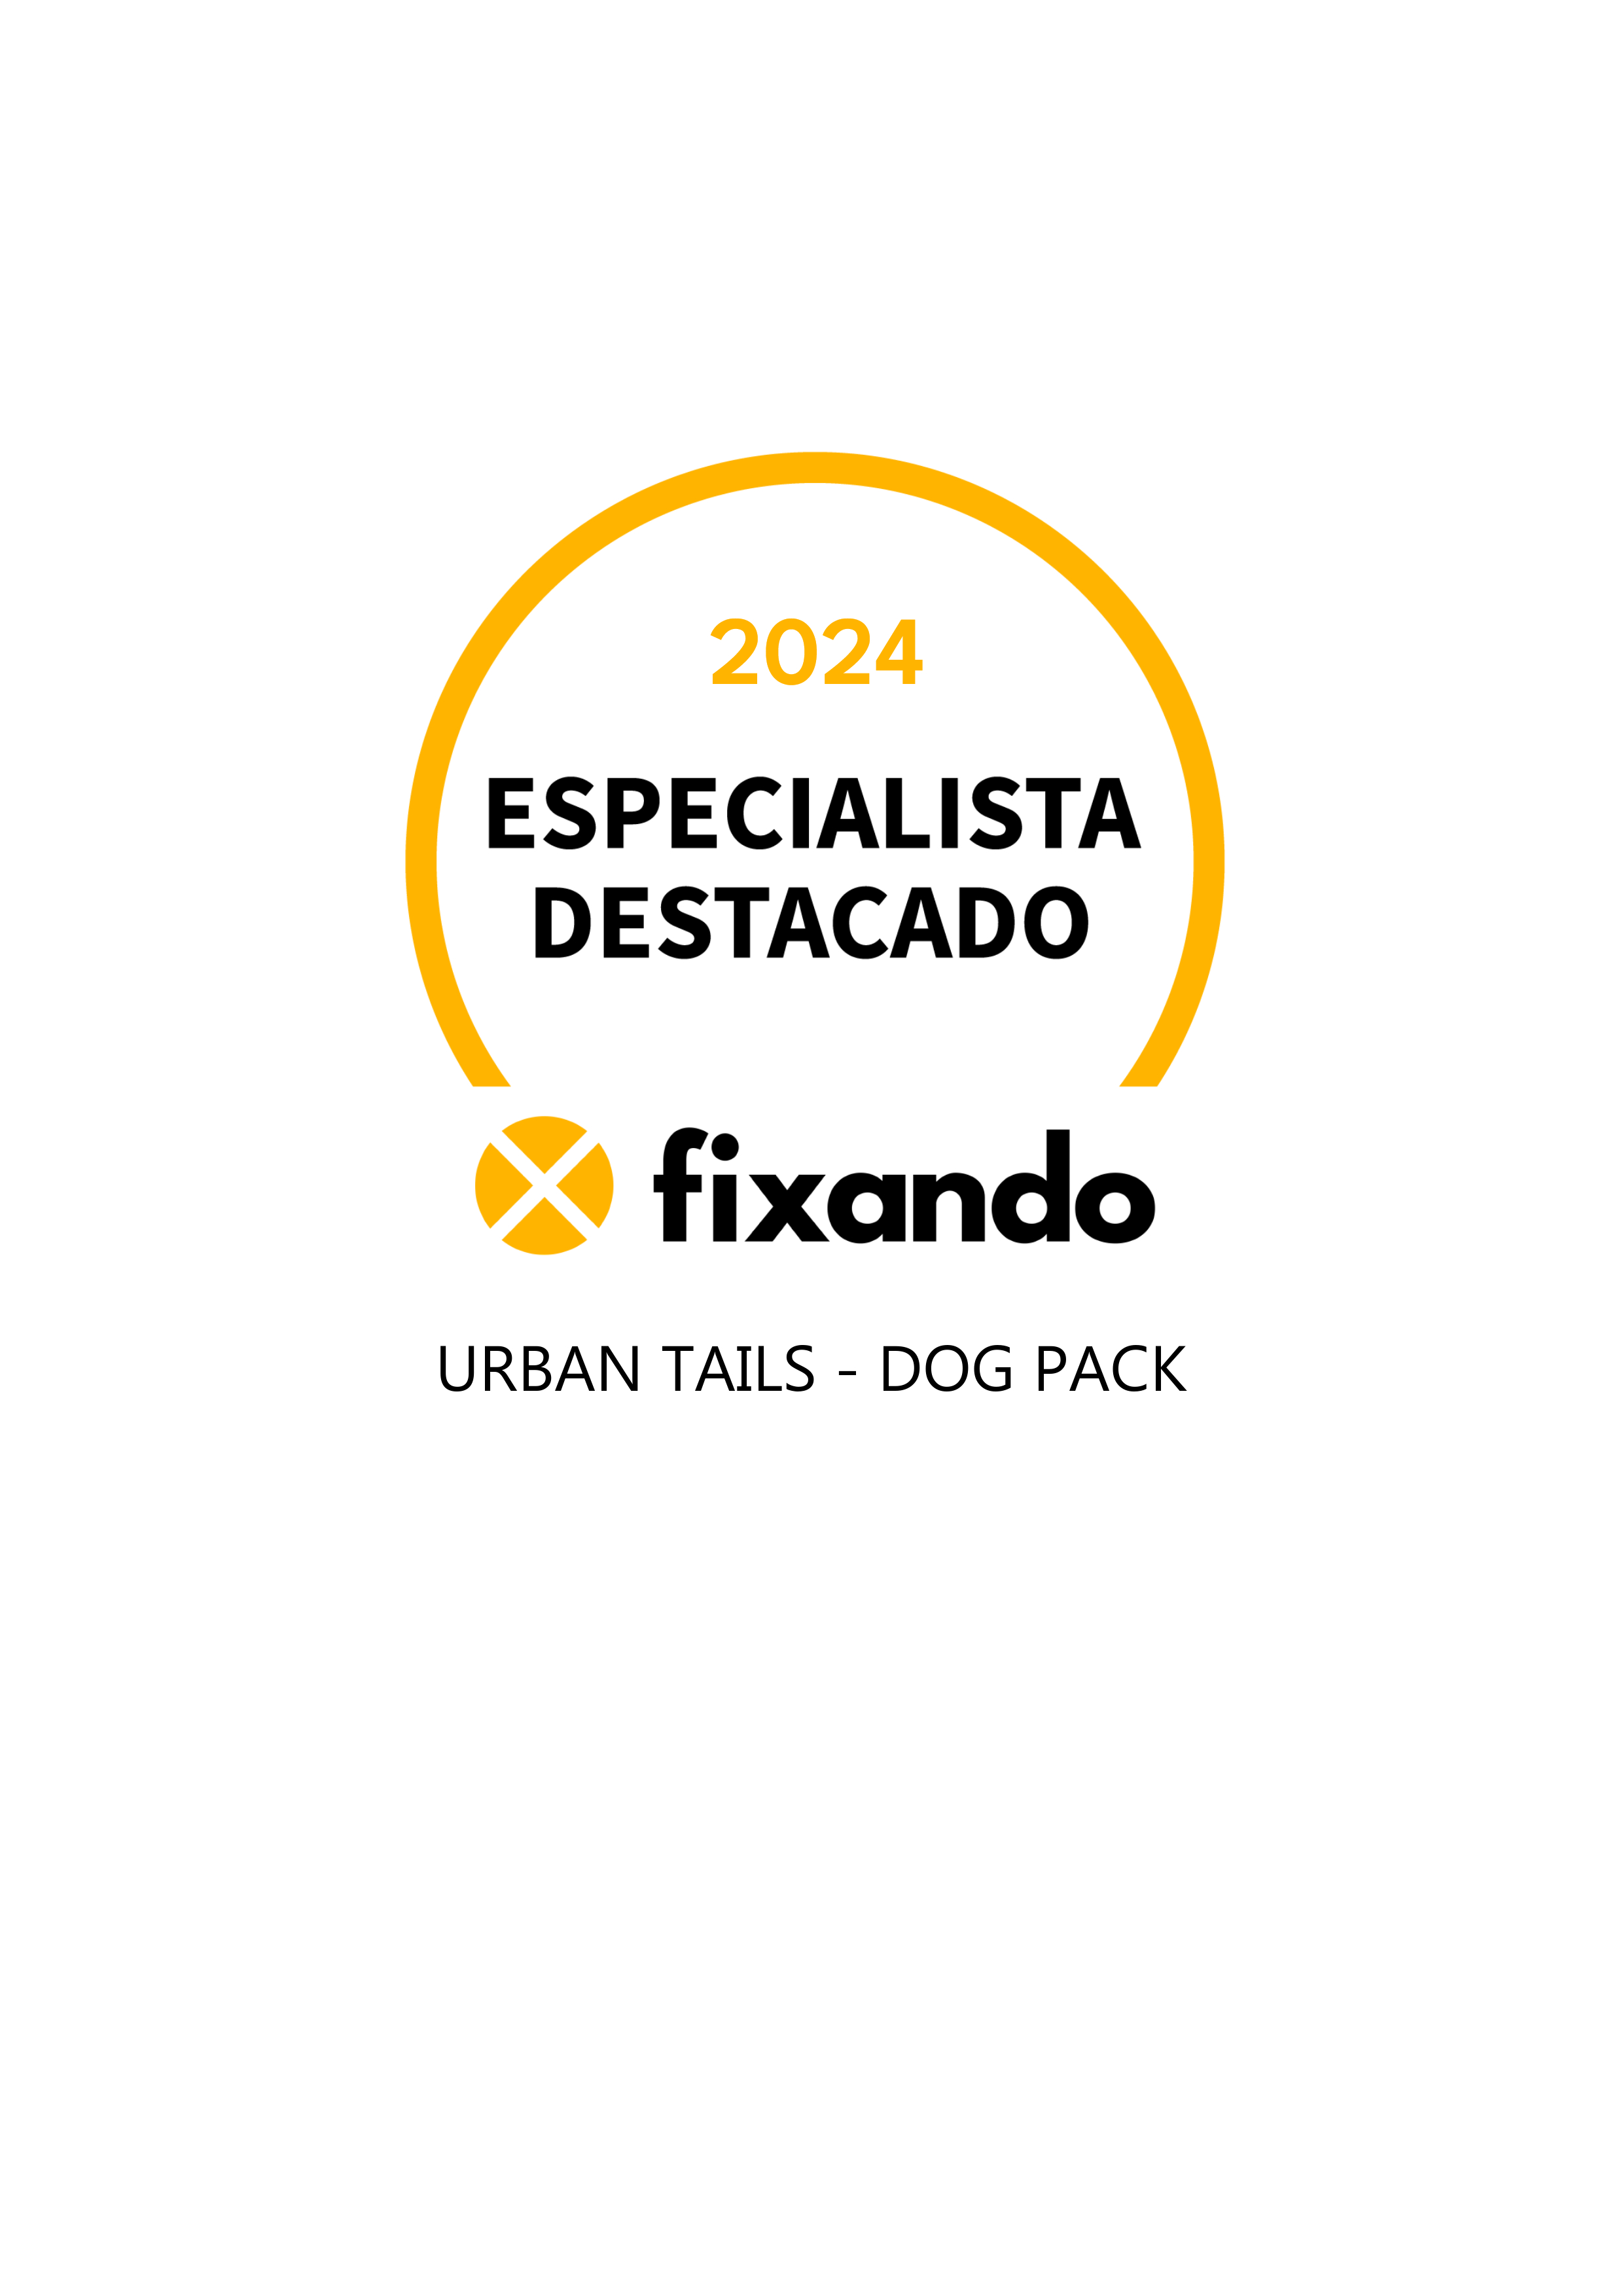 Urban Tails - Dog Pack - Vila Nova de Gaia - Dog Sitting